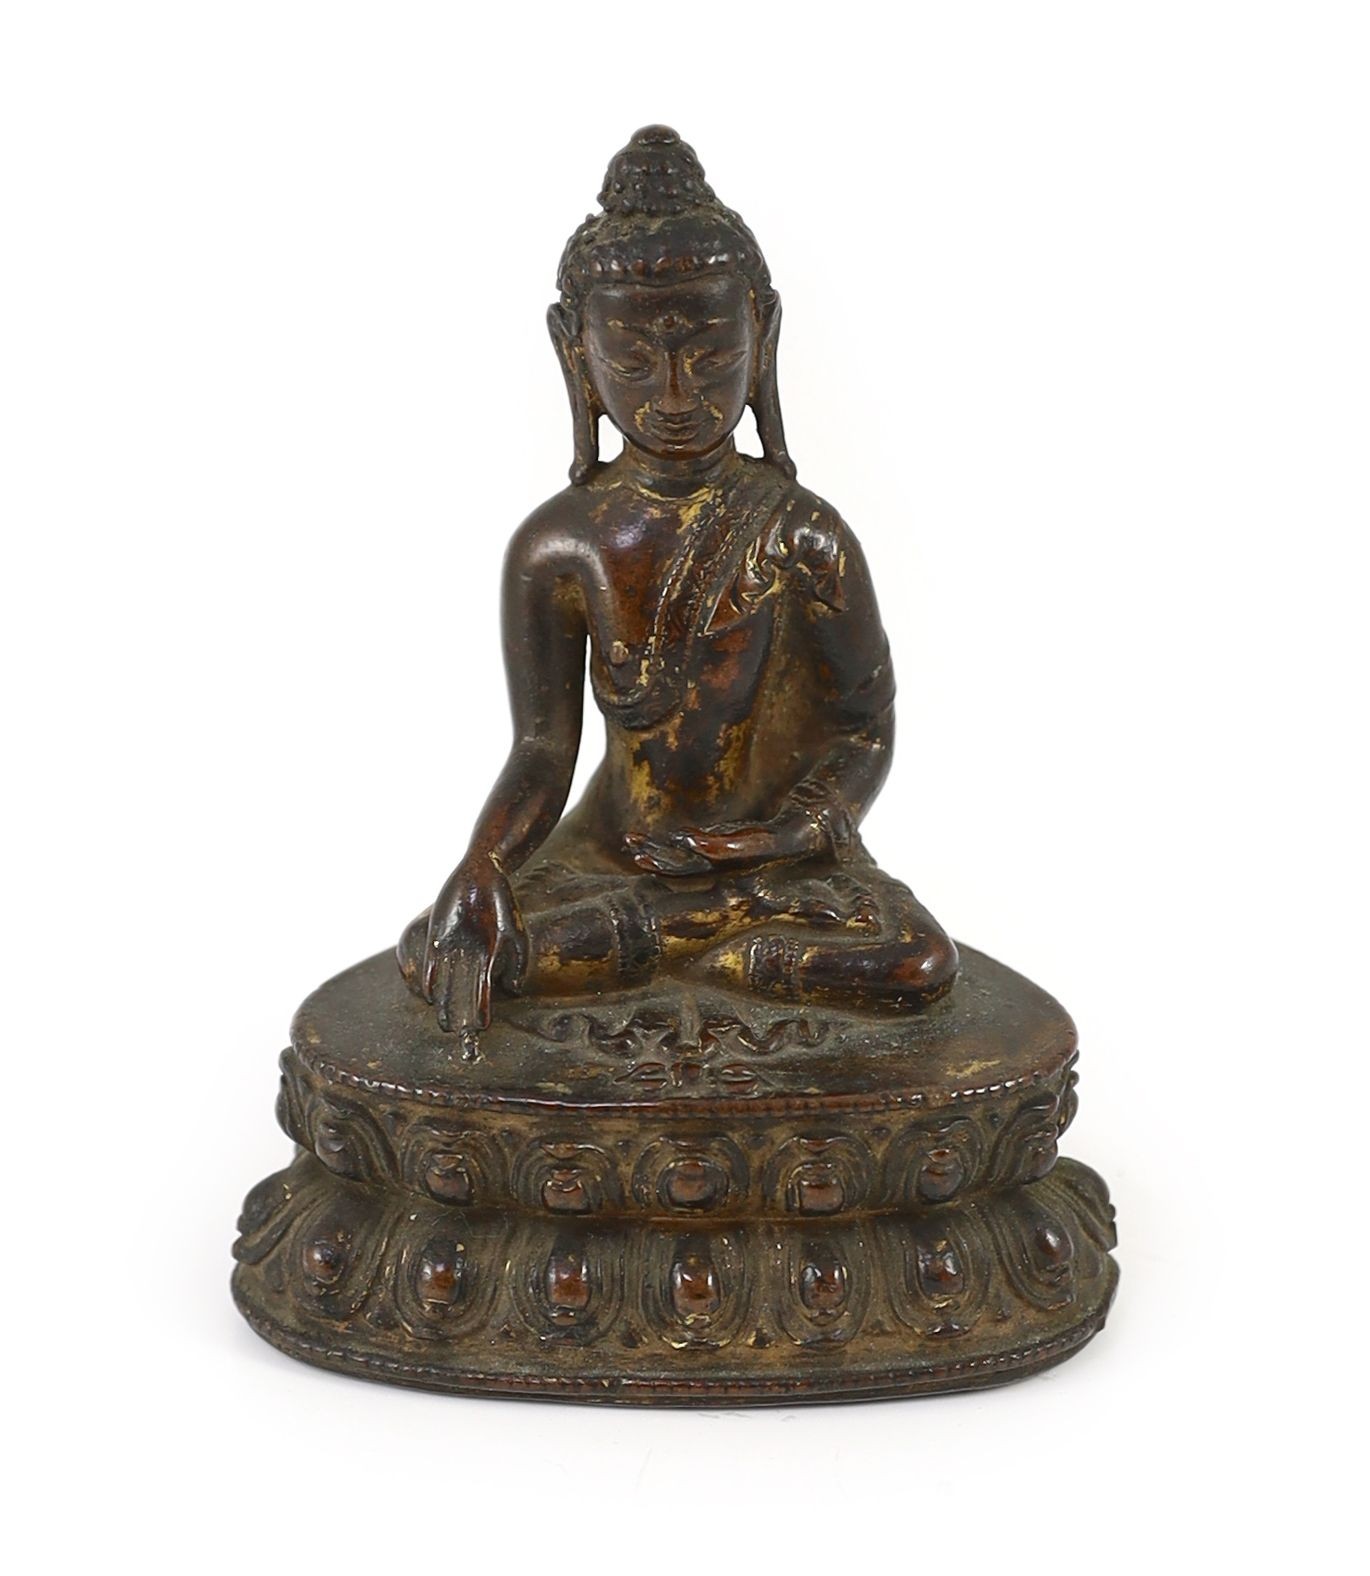 A small Tibetan gilt copper alloy seated figure of Buddha Shakyamuni, probably 15th/16th century, 10.4cm